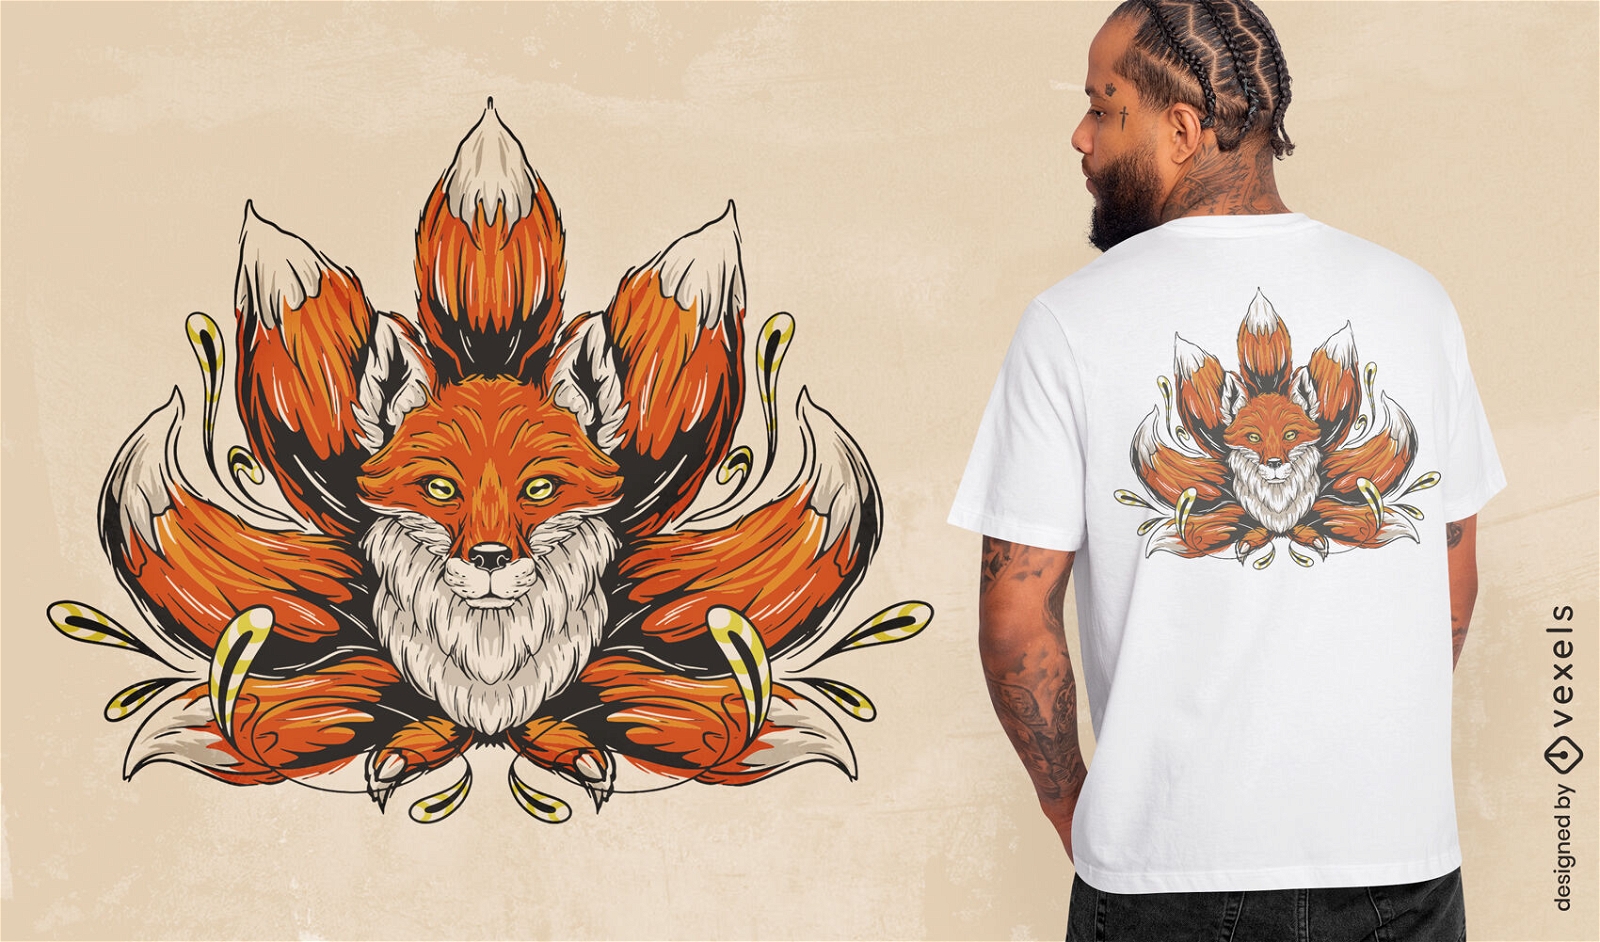 Nine tail fox t-shirt design